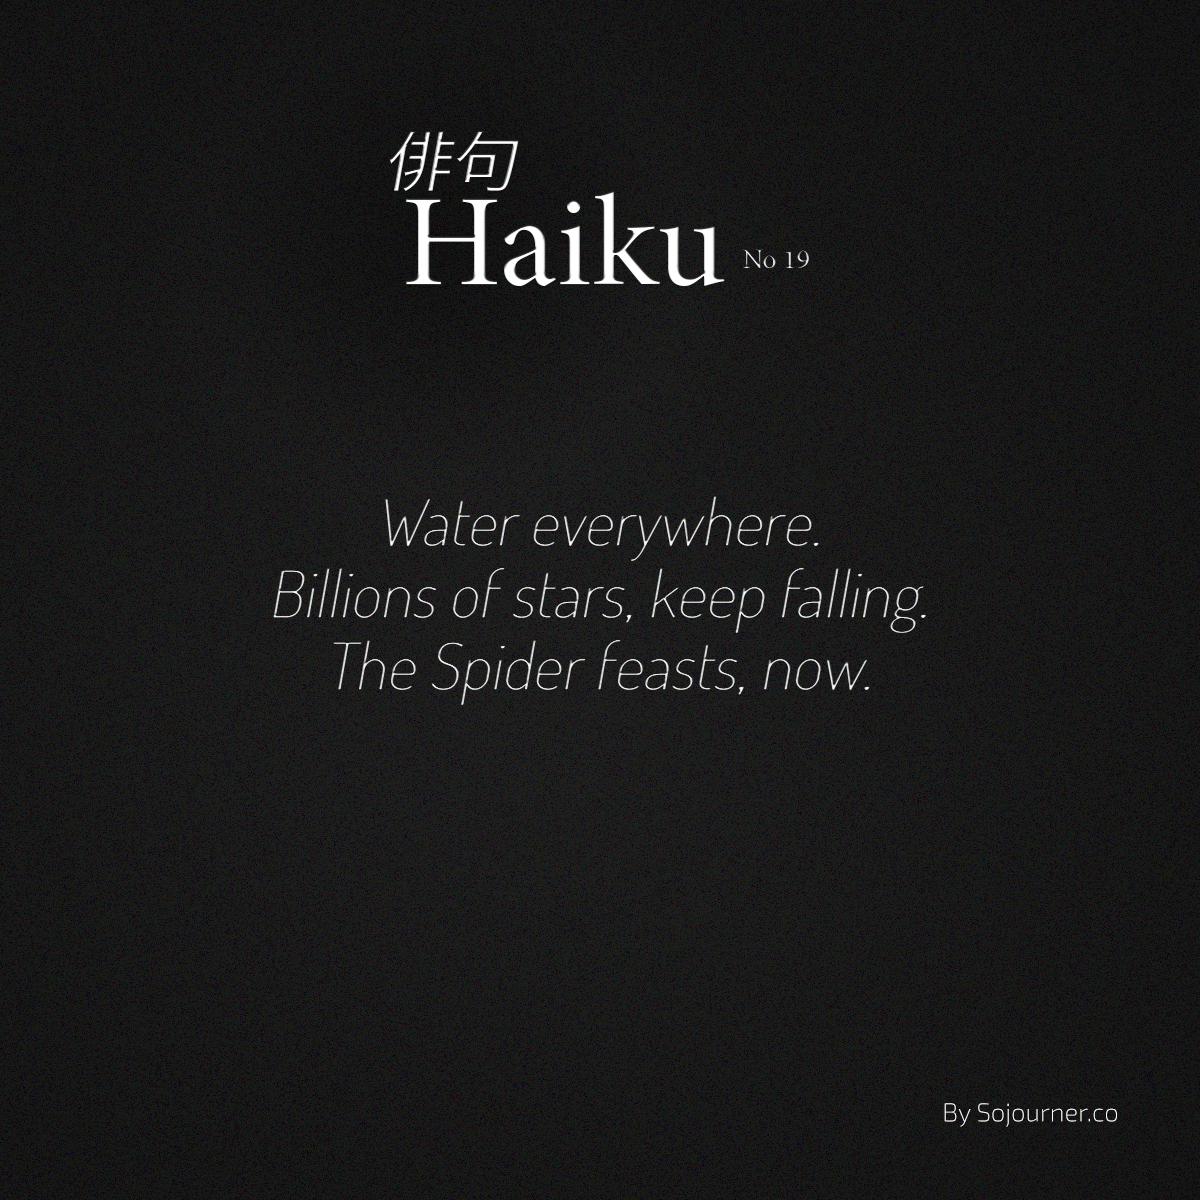 indefiniteloop.com - Haiku No. 19 - The Spider's Web.